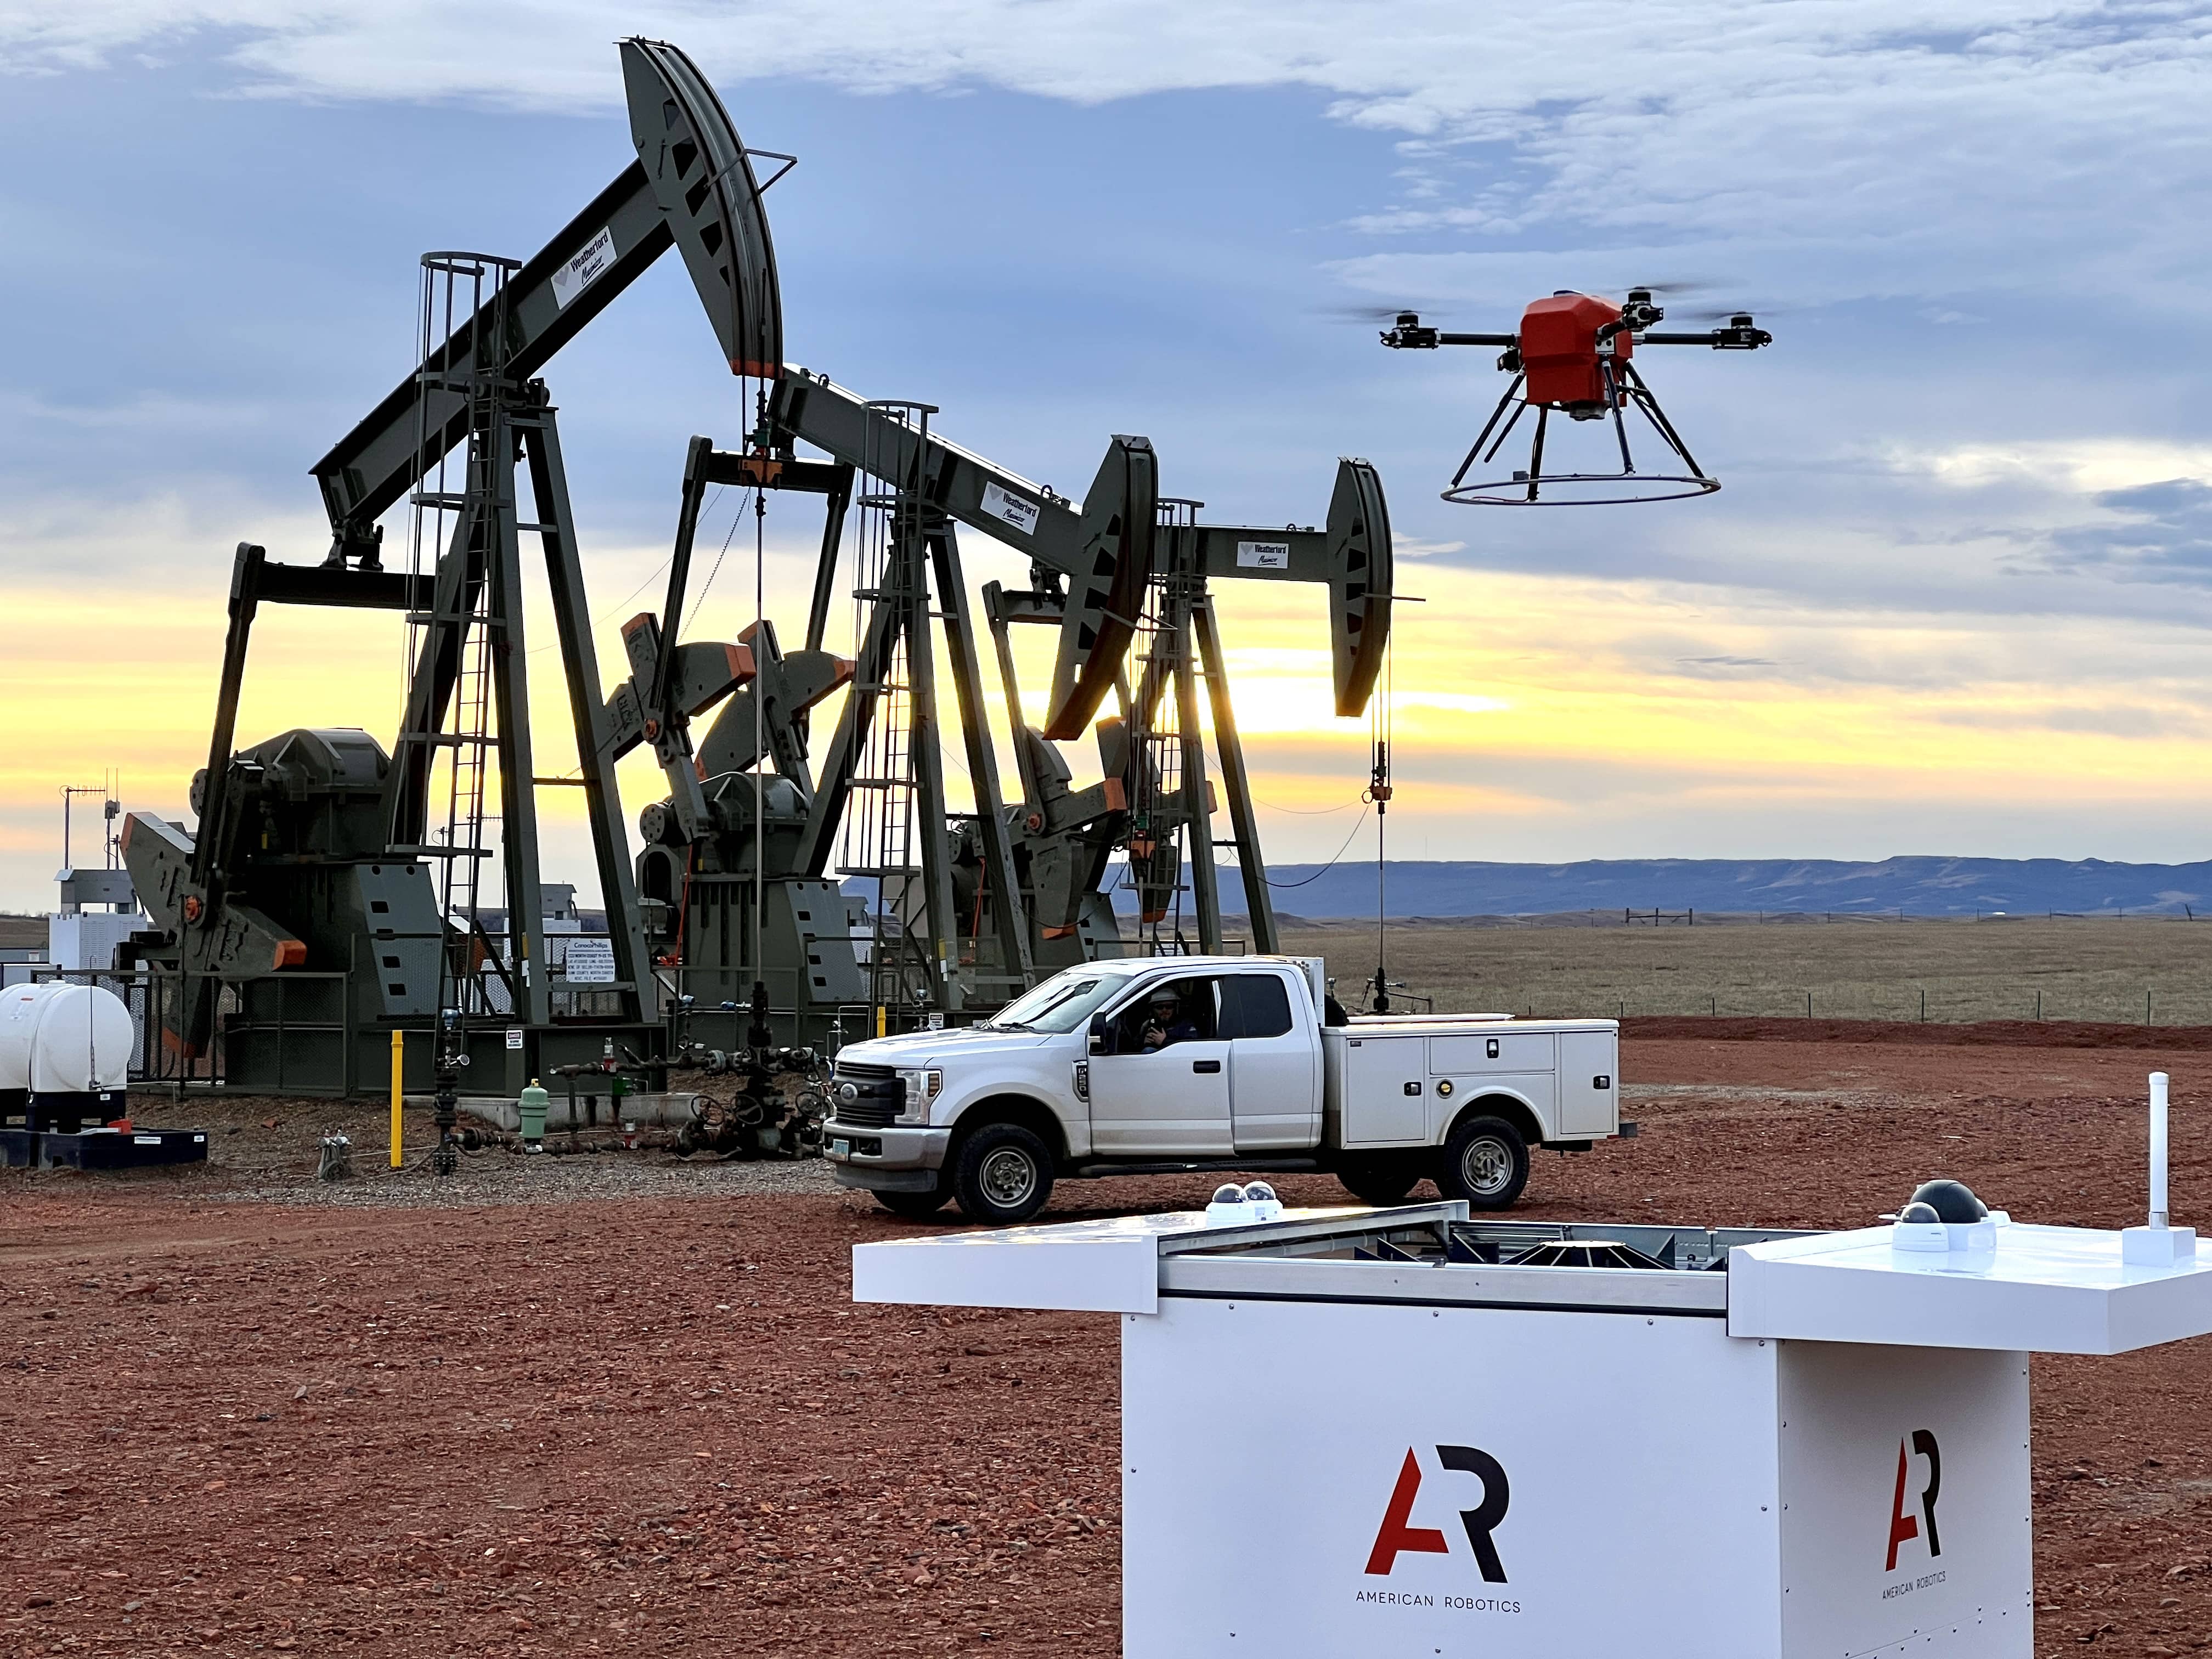 Metode Hvor Et bestemt American Robotics Scout drones can now fly BVLOS commercially